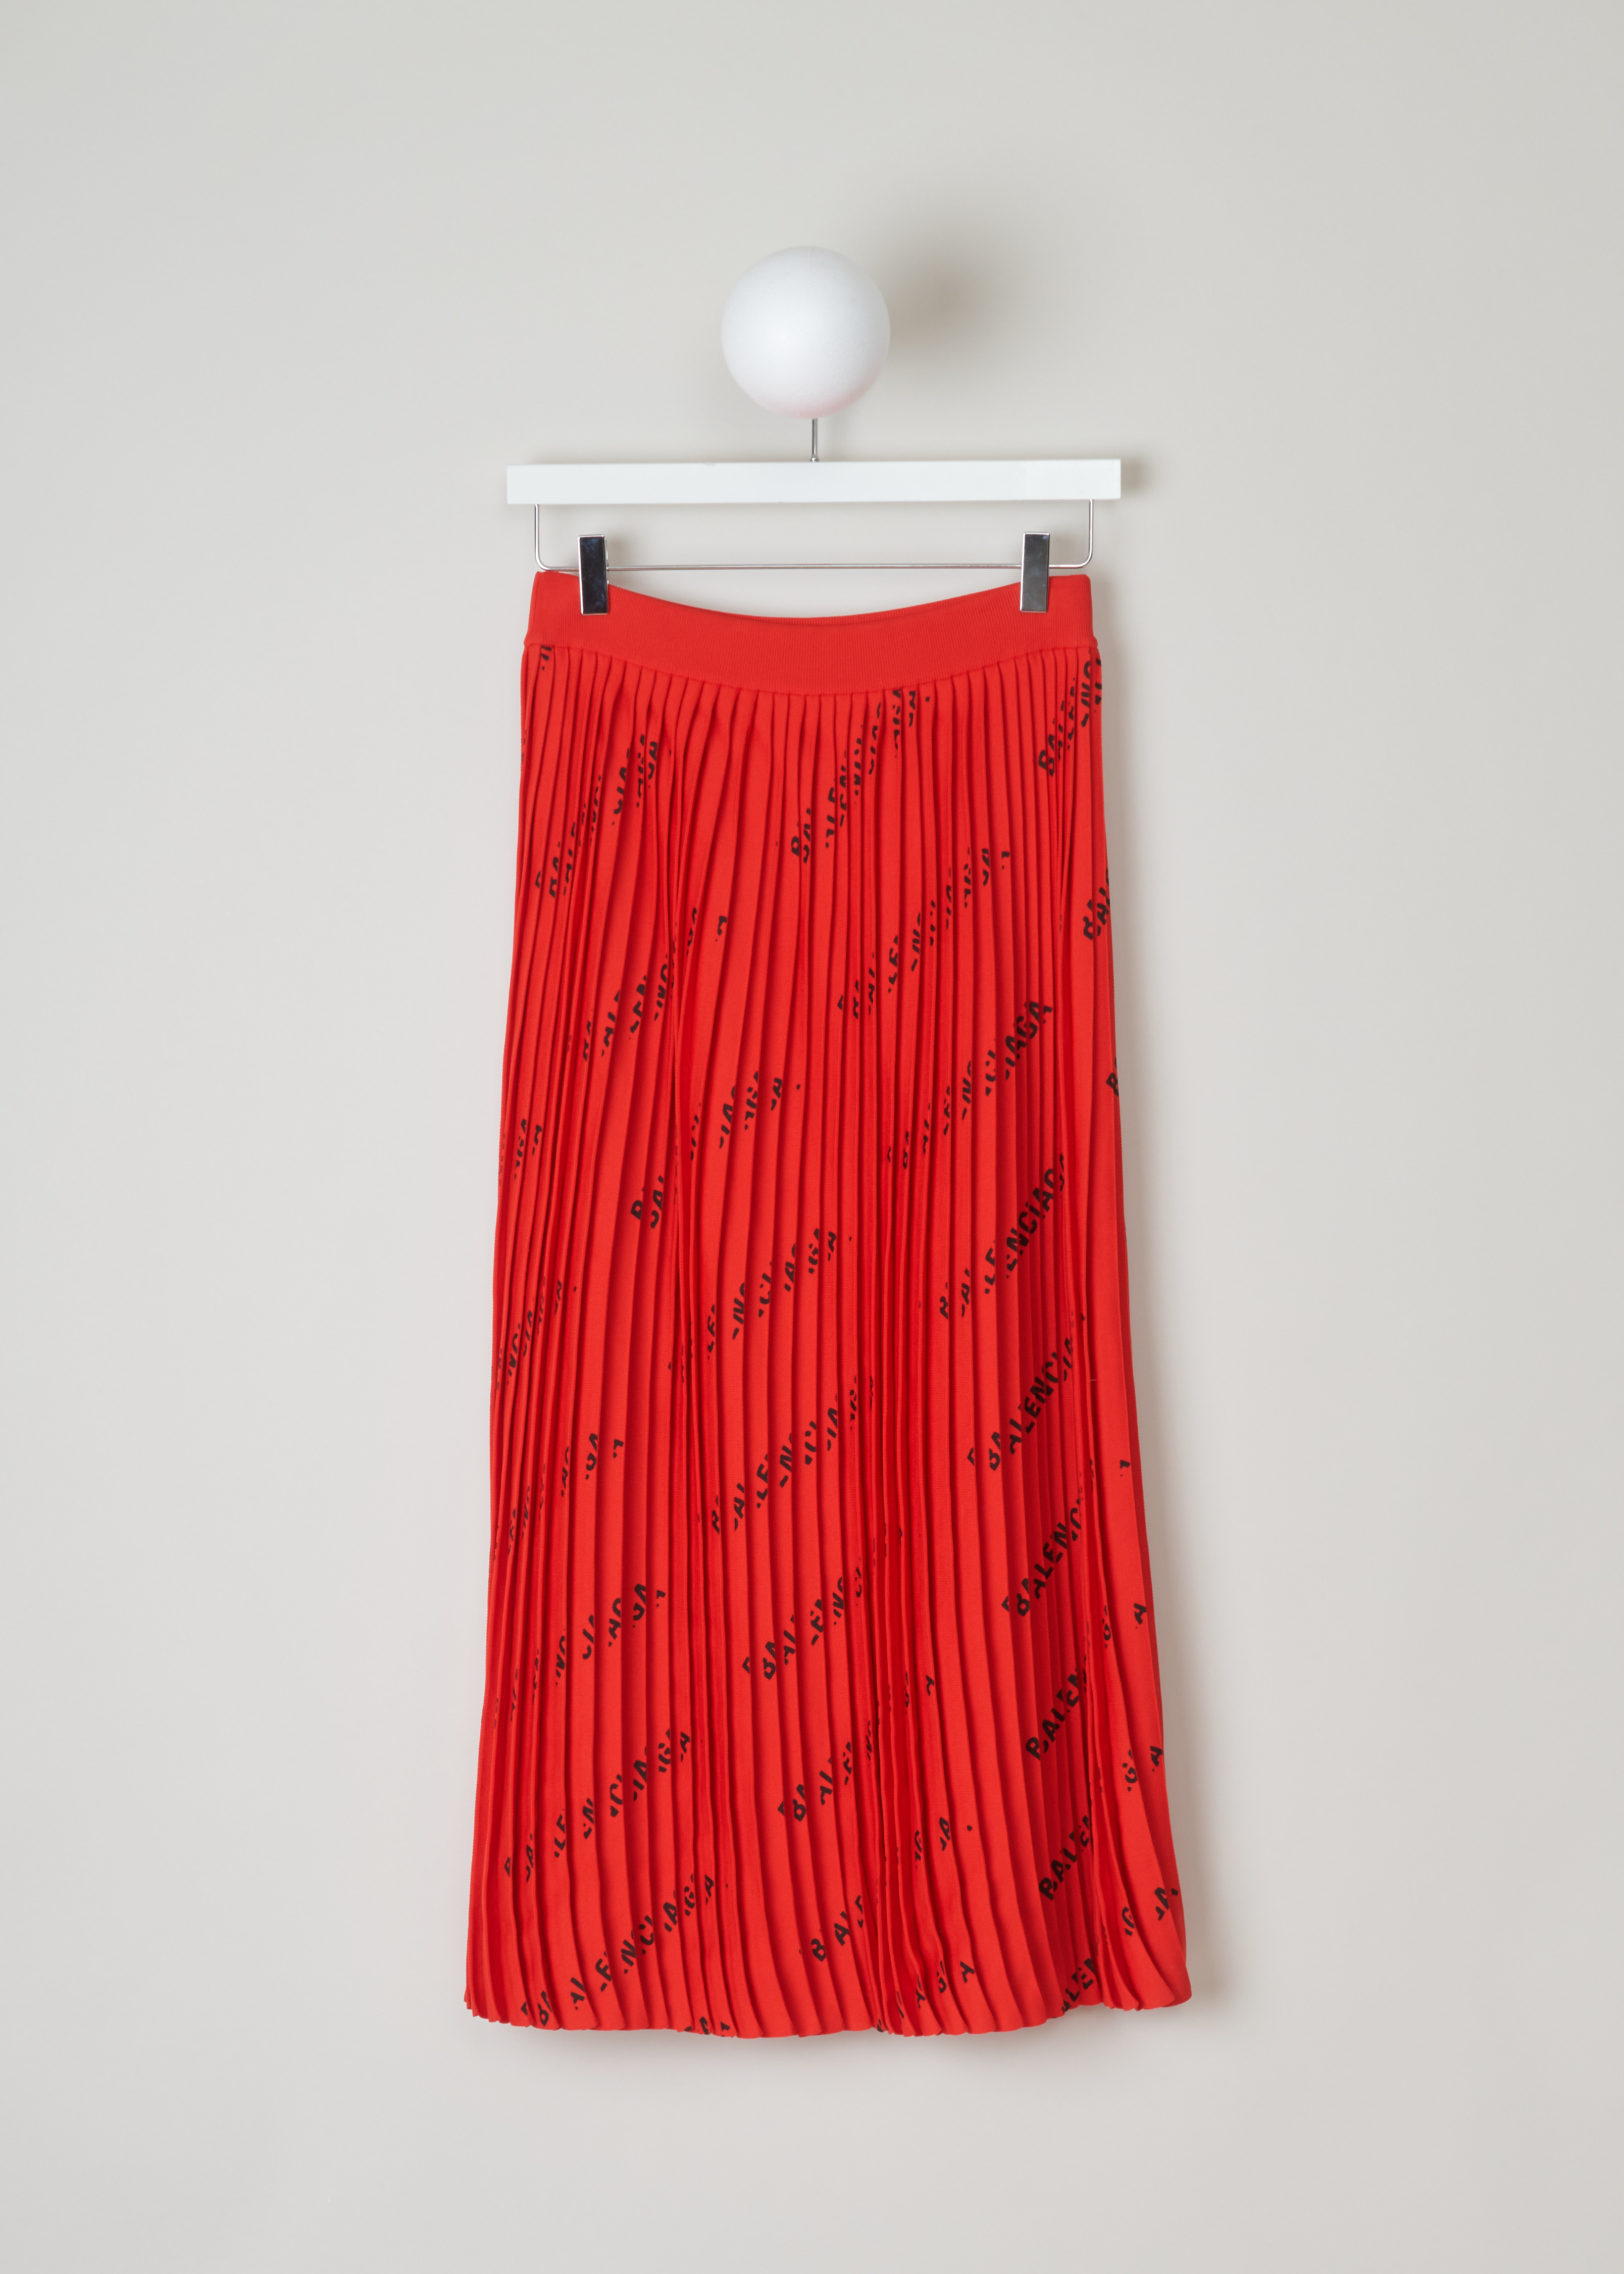 Balenciaga PlissÃ© skirt with logo pattern 570845_T6140_6282 red back. Midi length plissÃ© skirt with an all over logo print of the Balenciaga logo and an elasticated waistband.